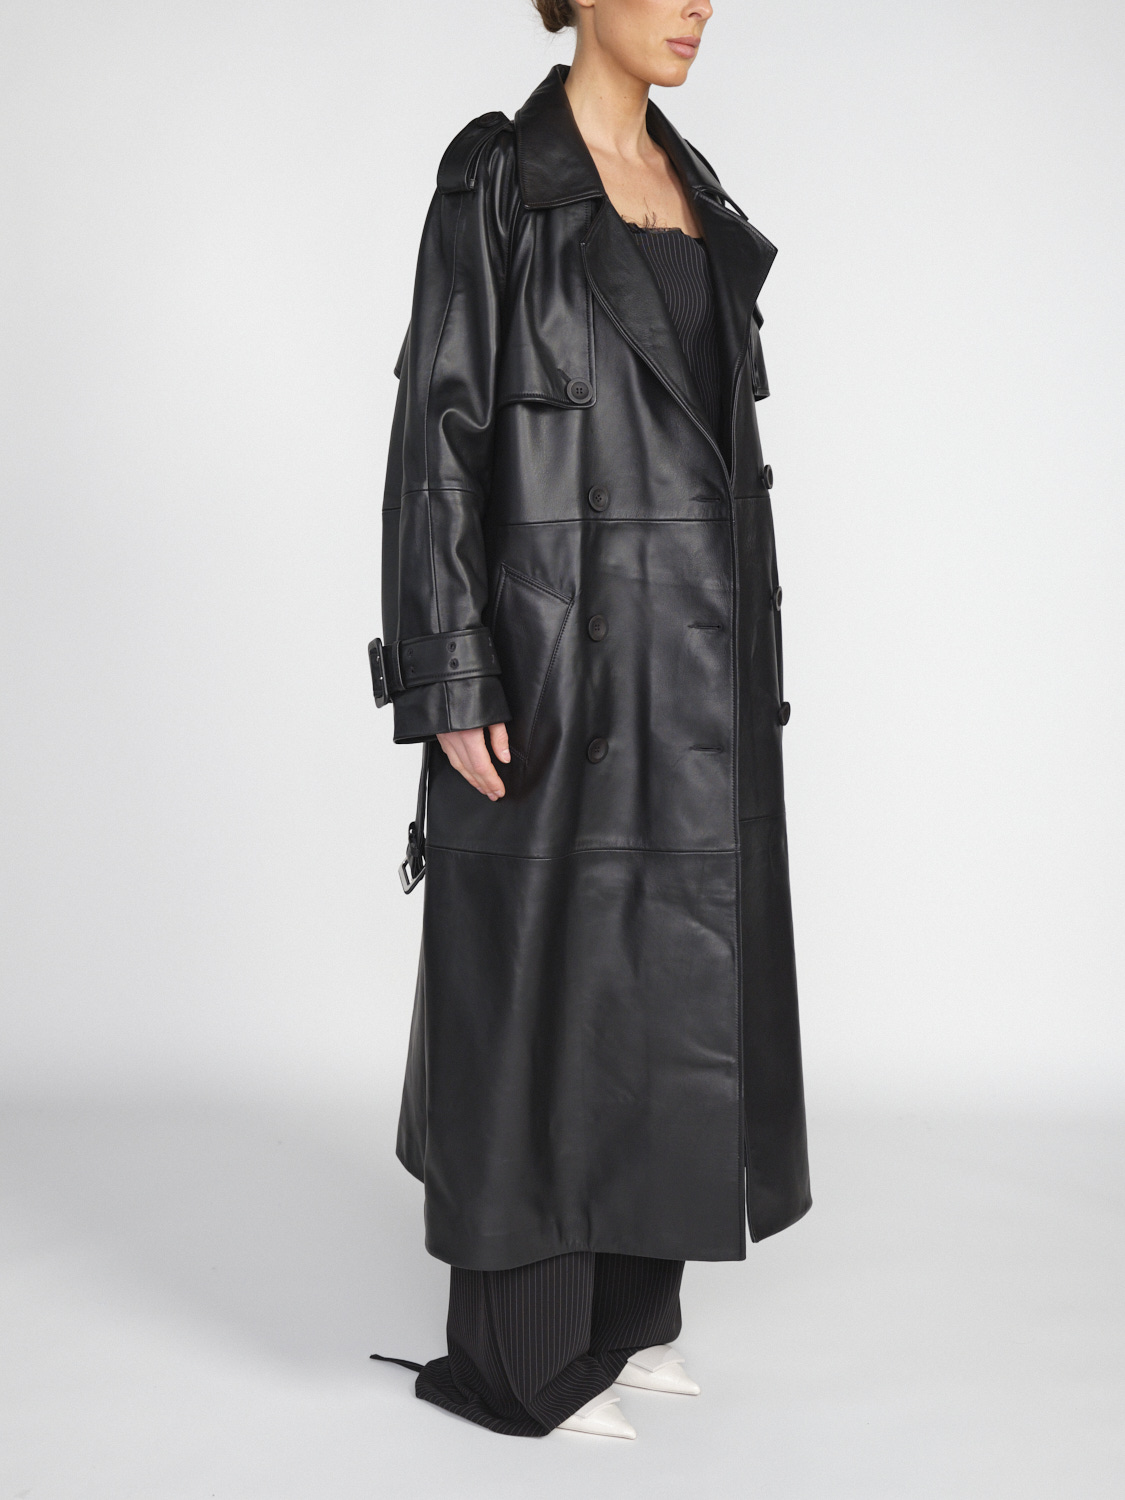 Arma Toledo – Oversized leather coat with tie belt  black 34